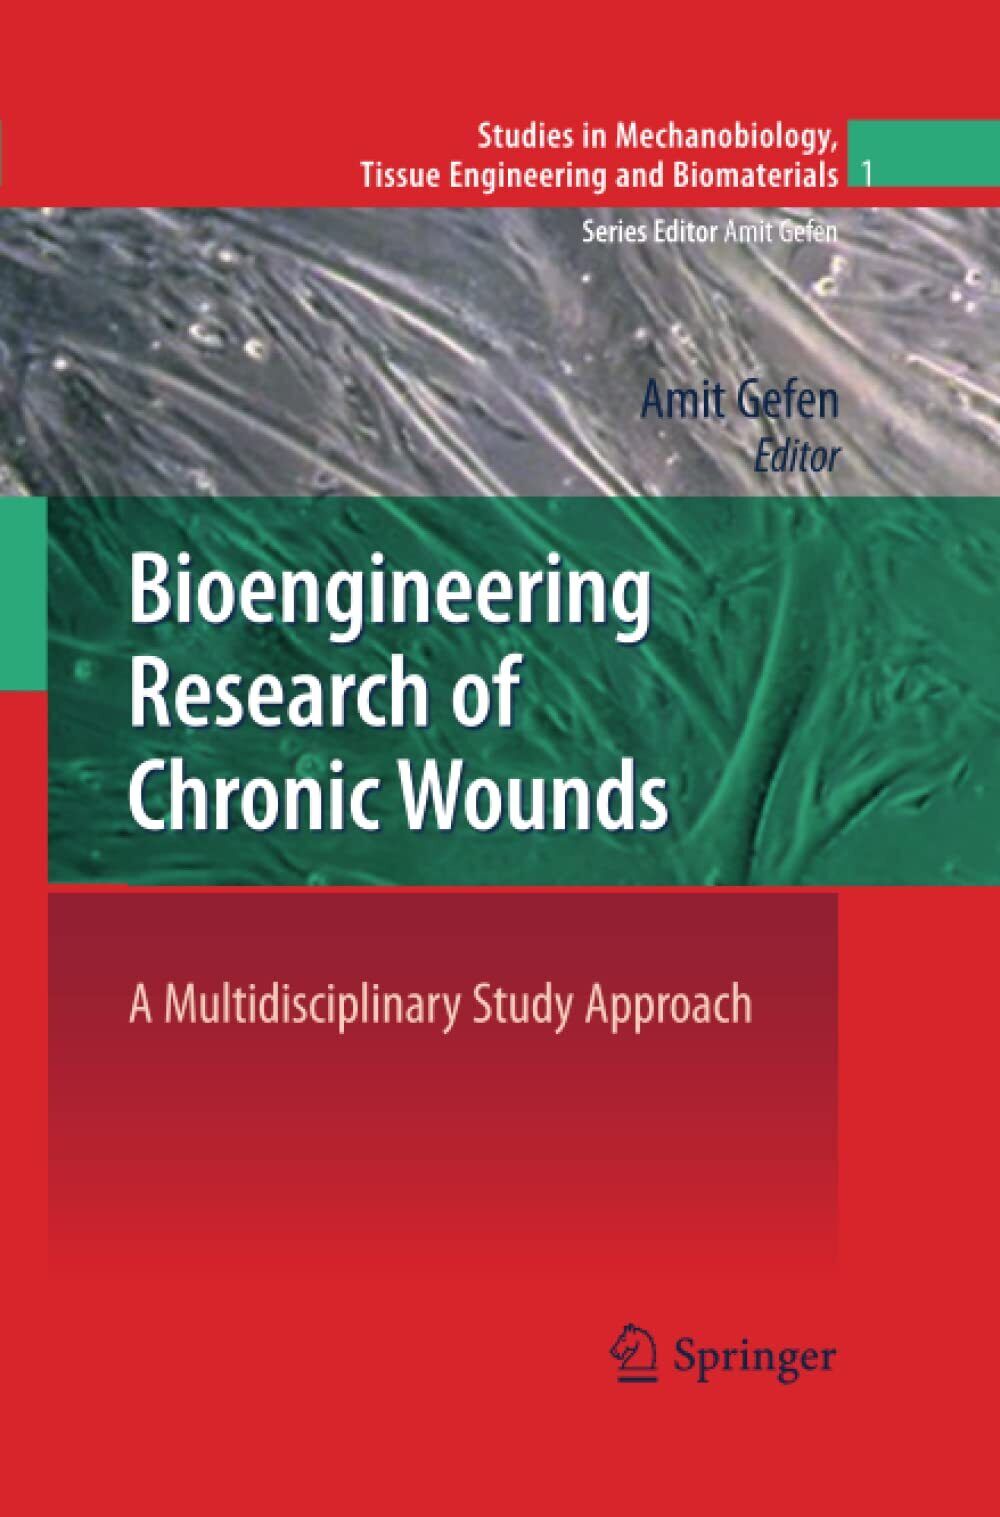 Bioengineering Research of Chronic Wounds - Amit Gefen - Springer, 2012